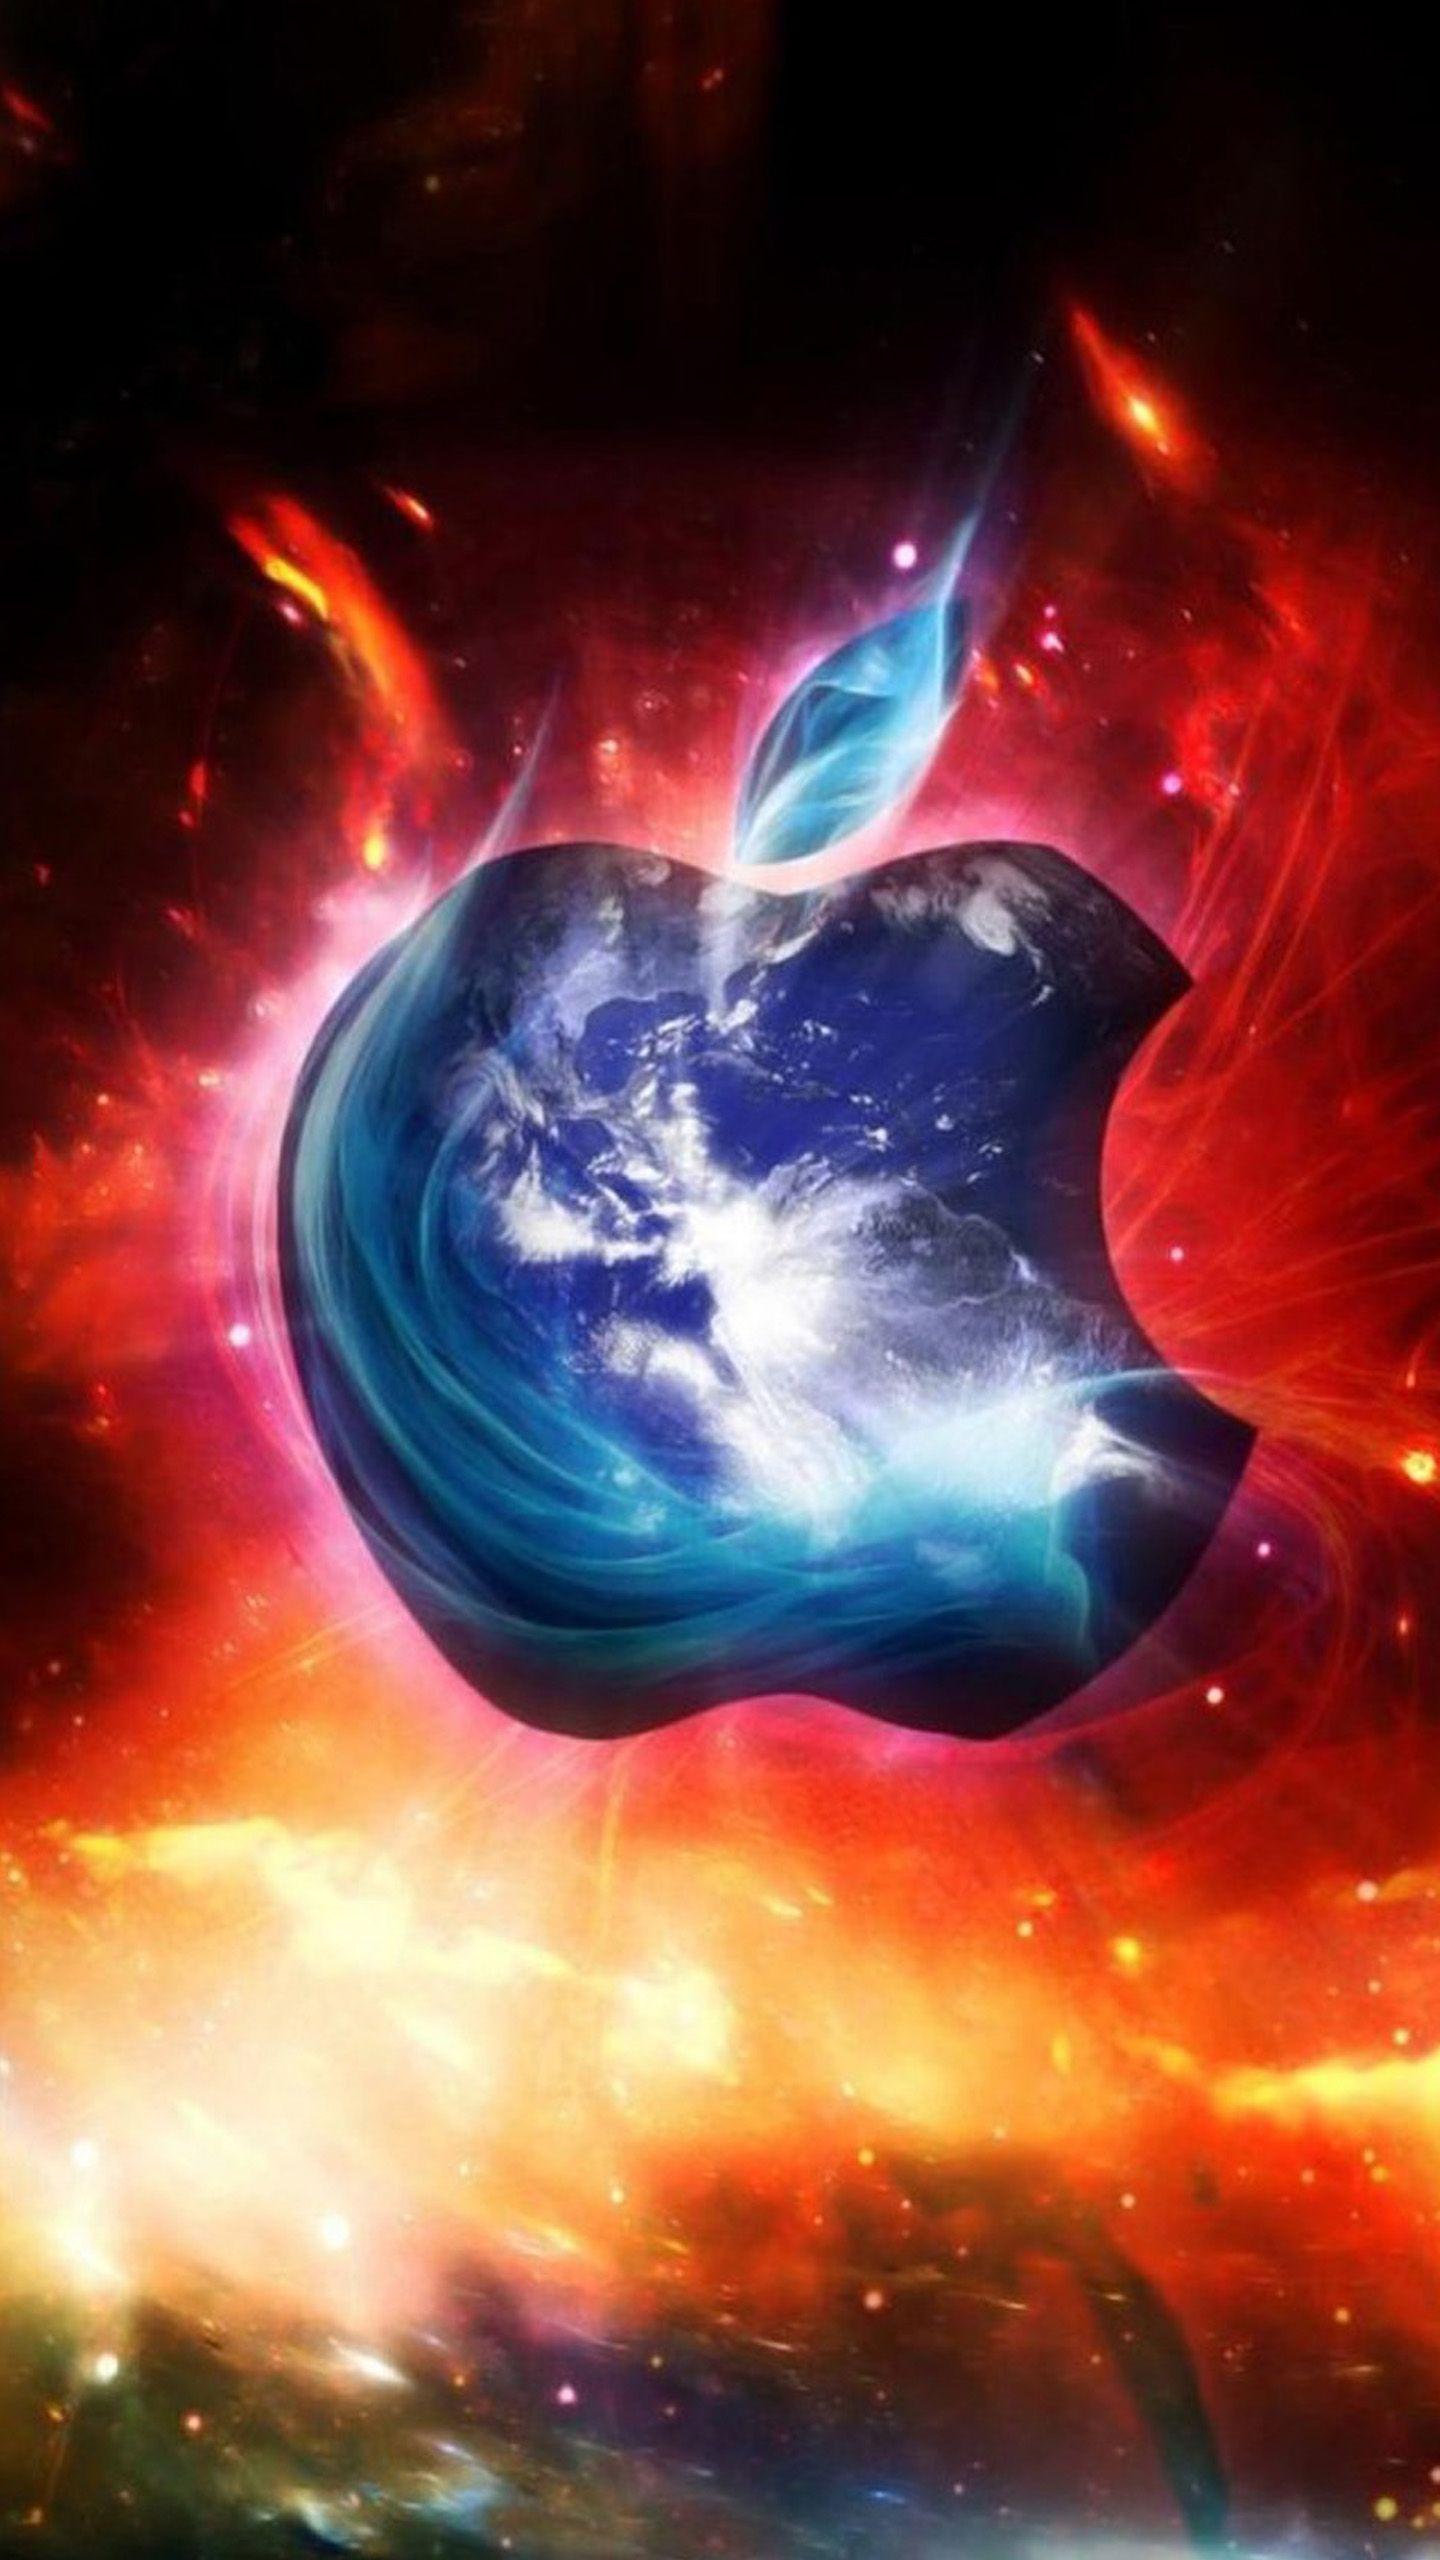 Cool Apple Logo - Cool Apple logo 2 Galaxy S6 Wallpaper | Galaxy S6 Wallpapers